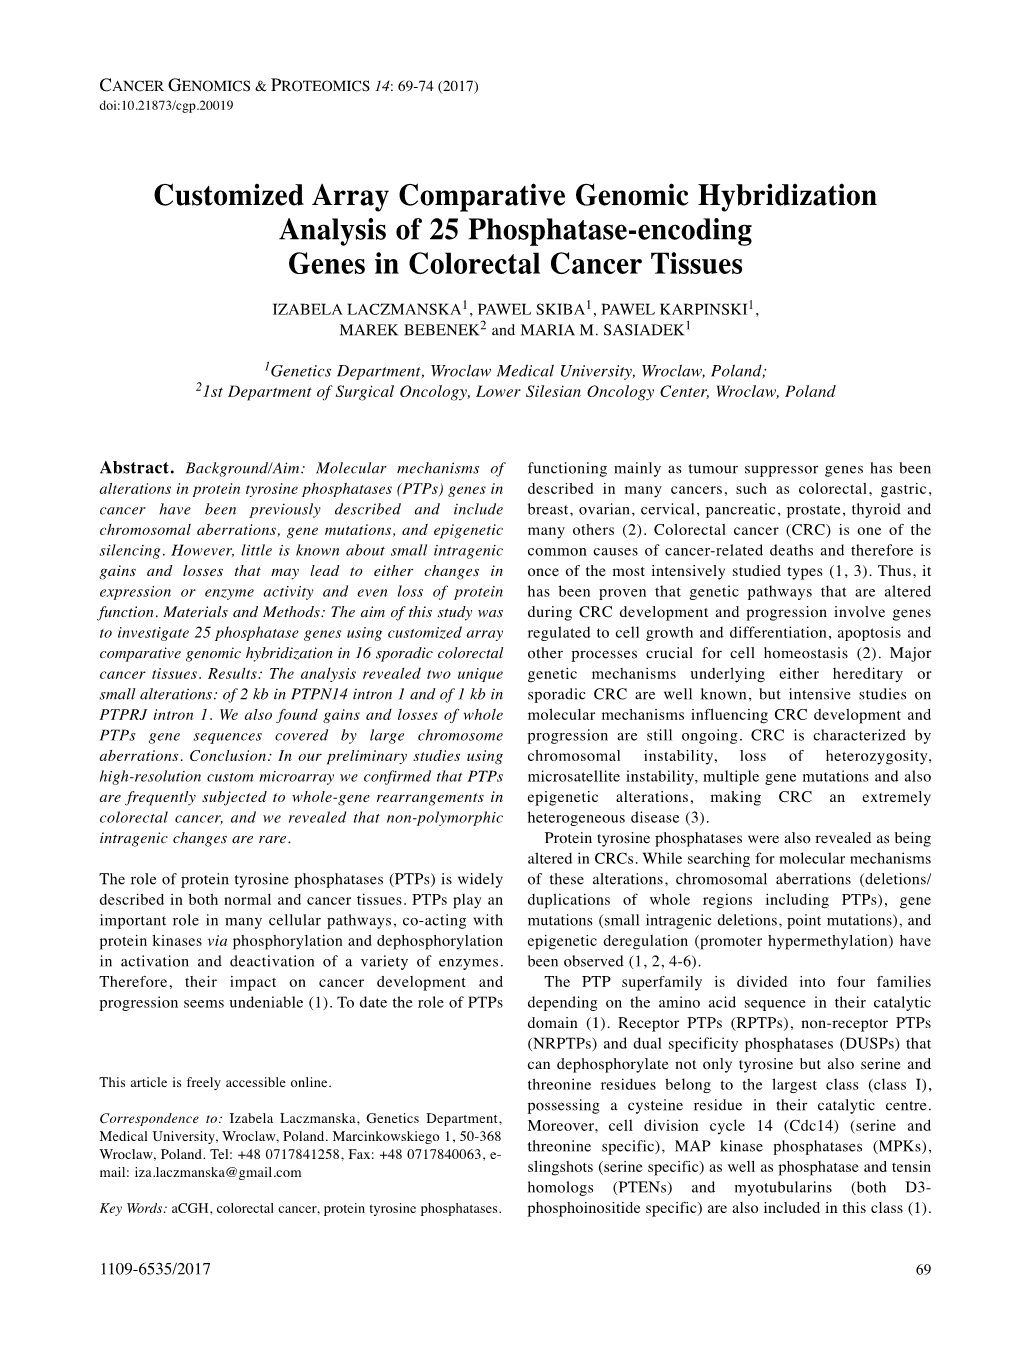 Customized Array Comparative Genomic Hybridization Analysis Of